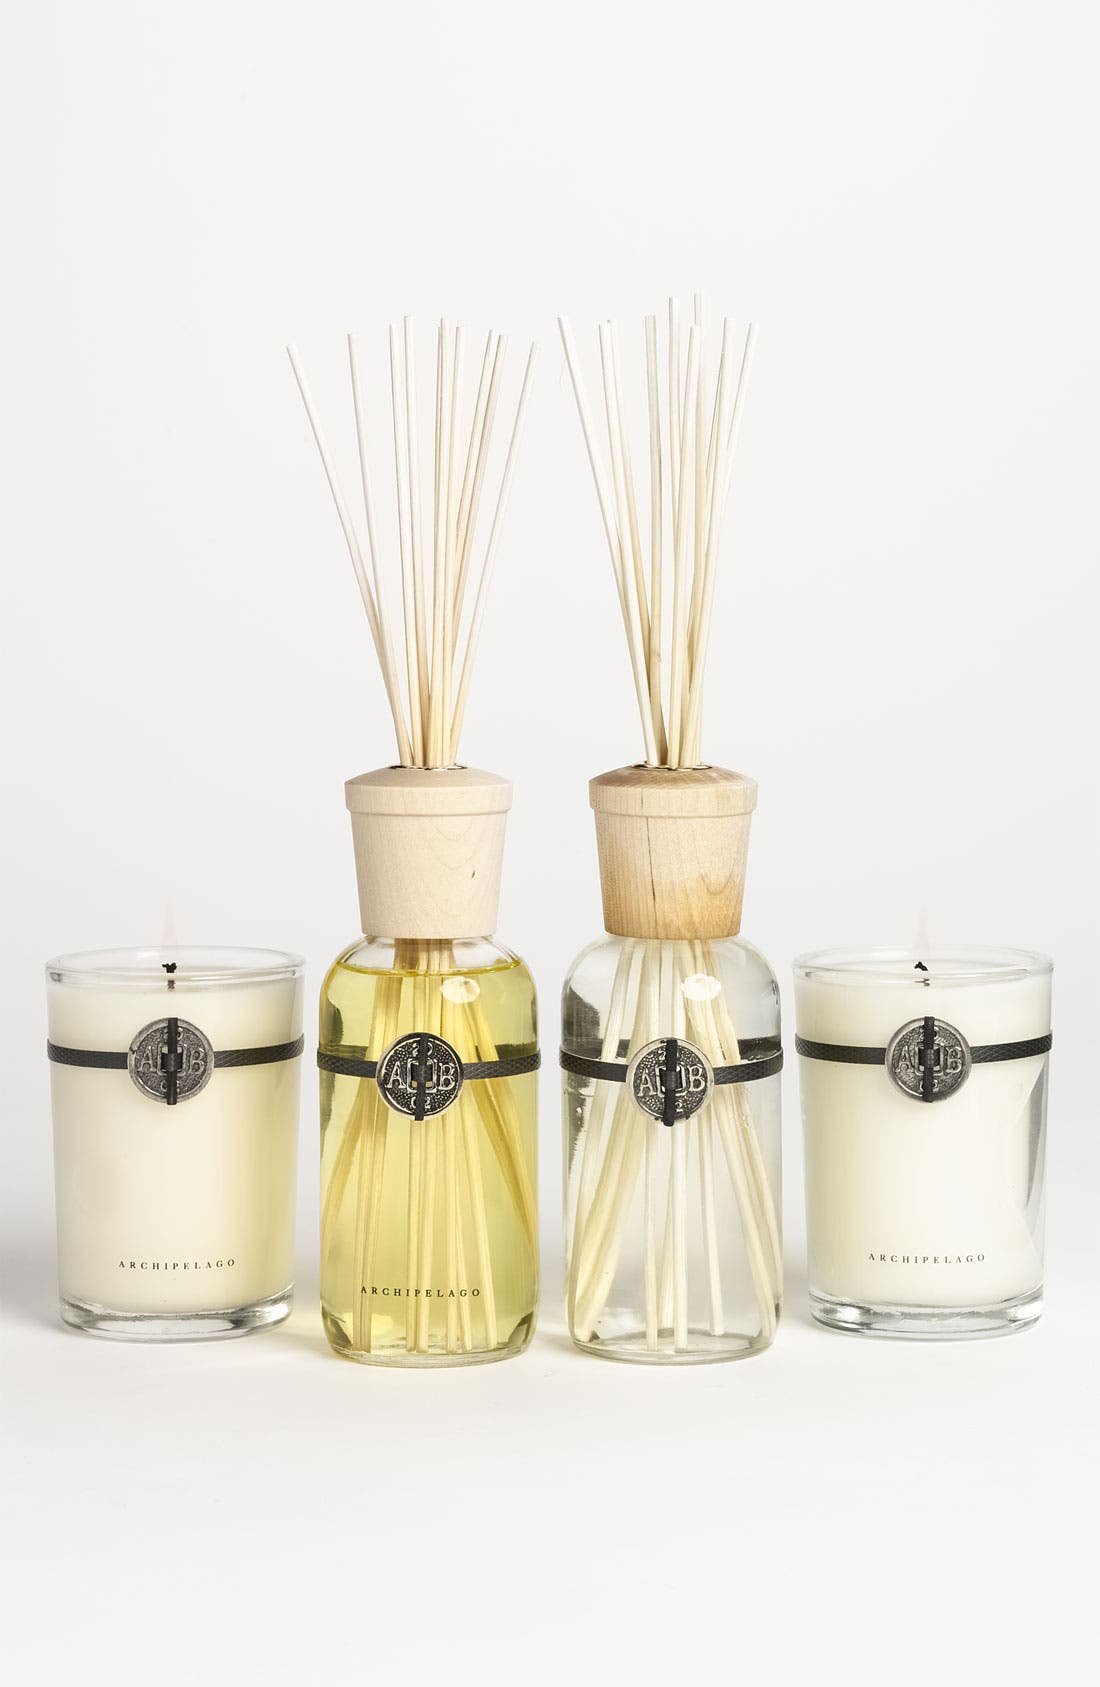 2 Pack NEW Gift Set Home Fragrance Reed Diffuser Archipelago Botanicals 8.4 oz 